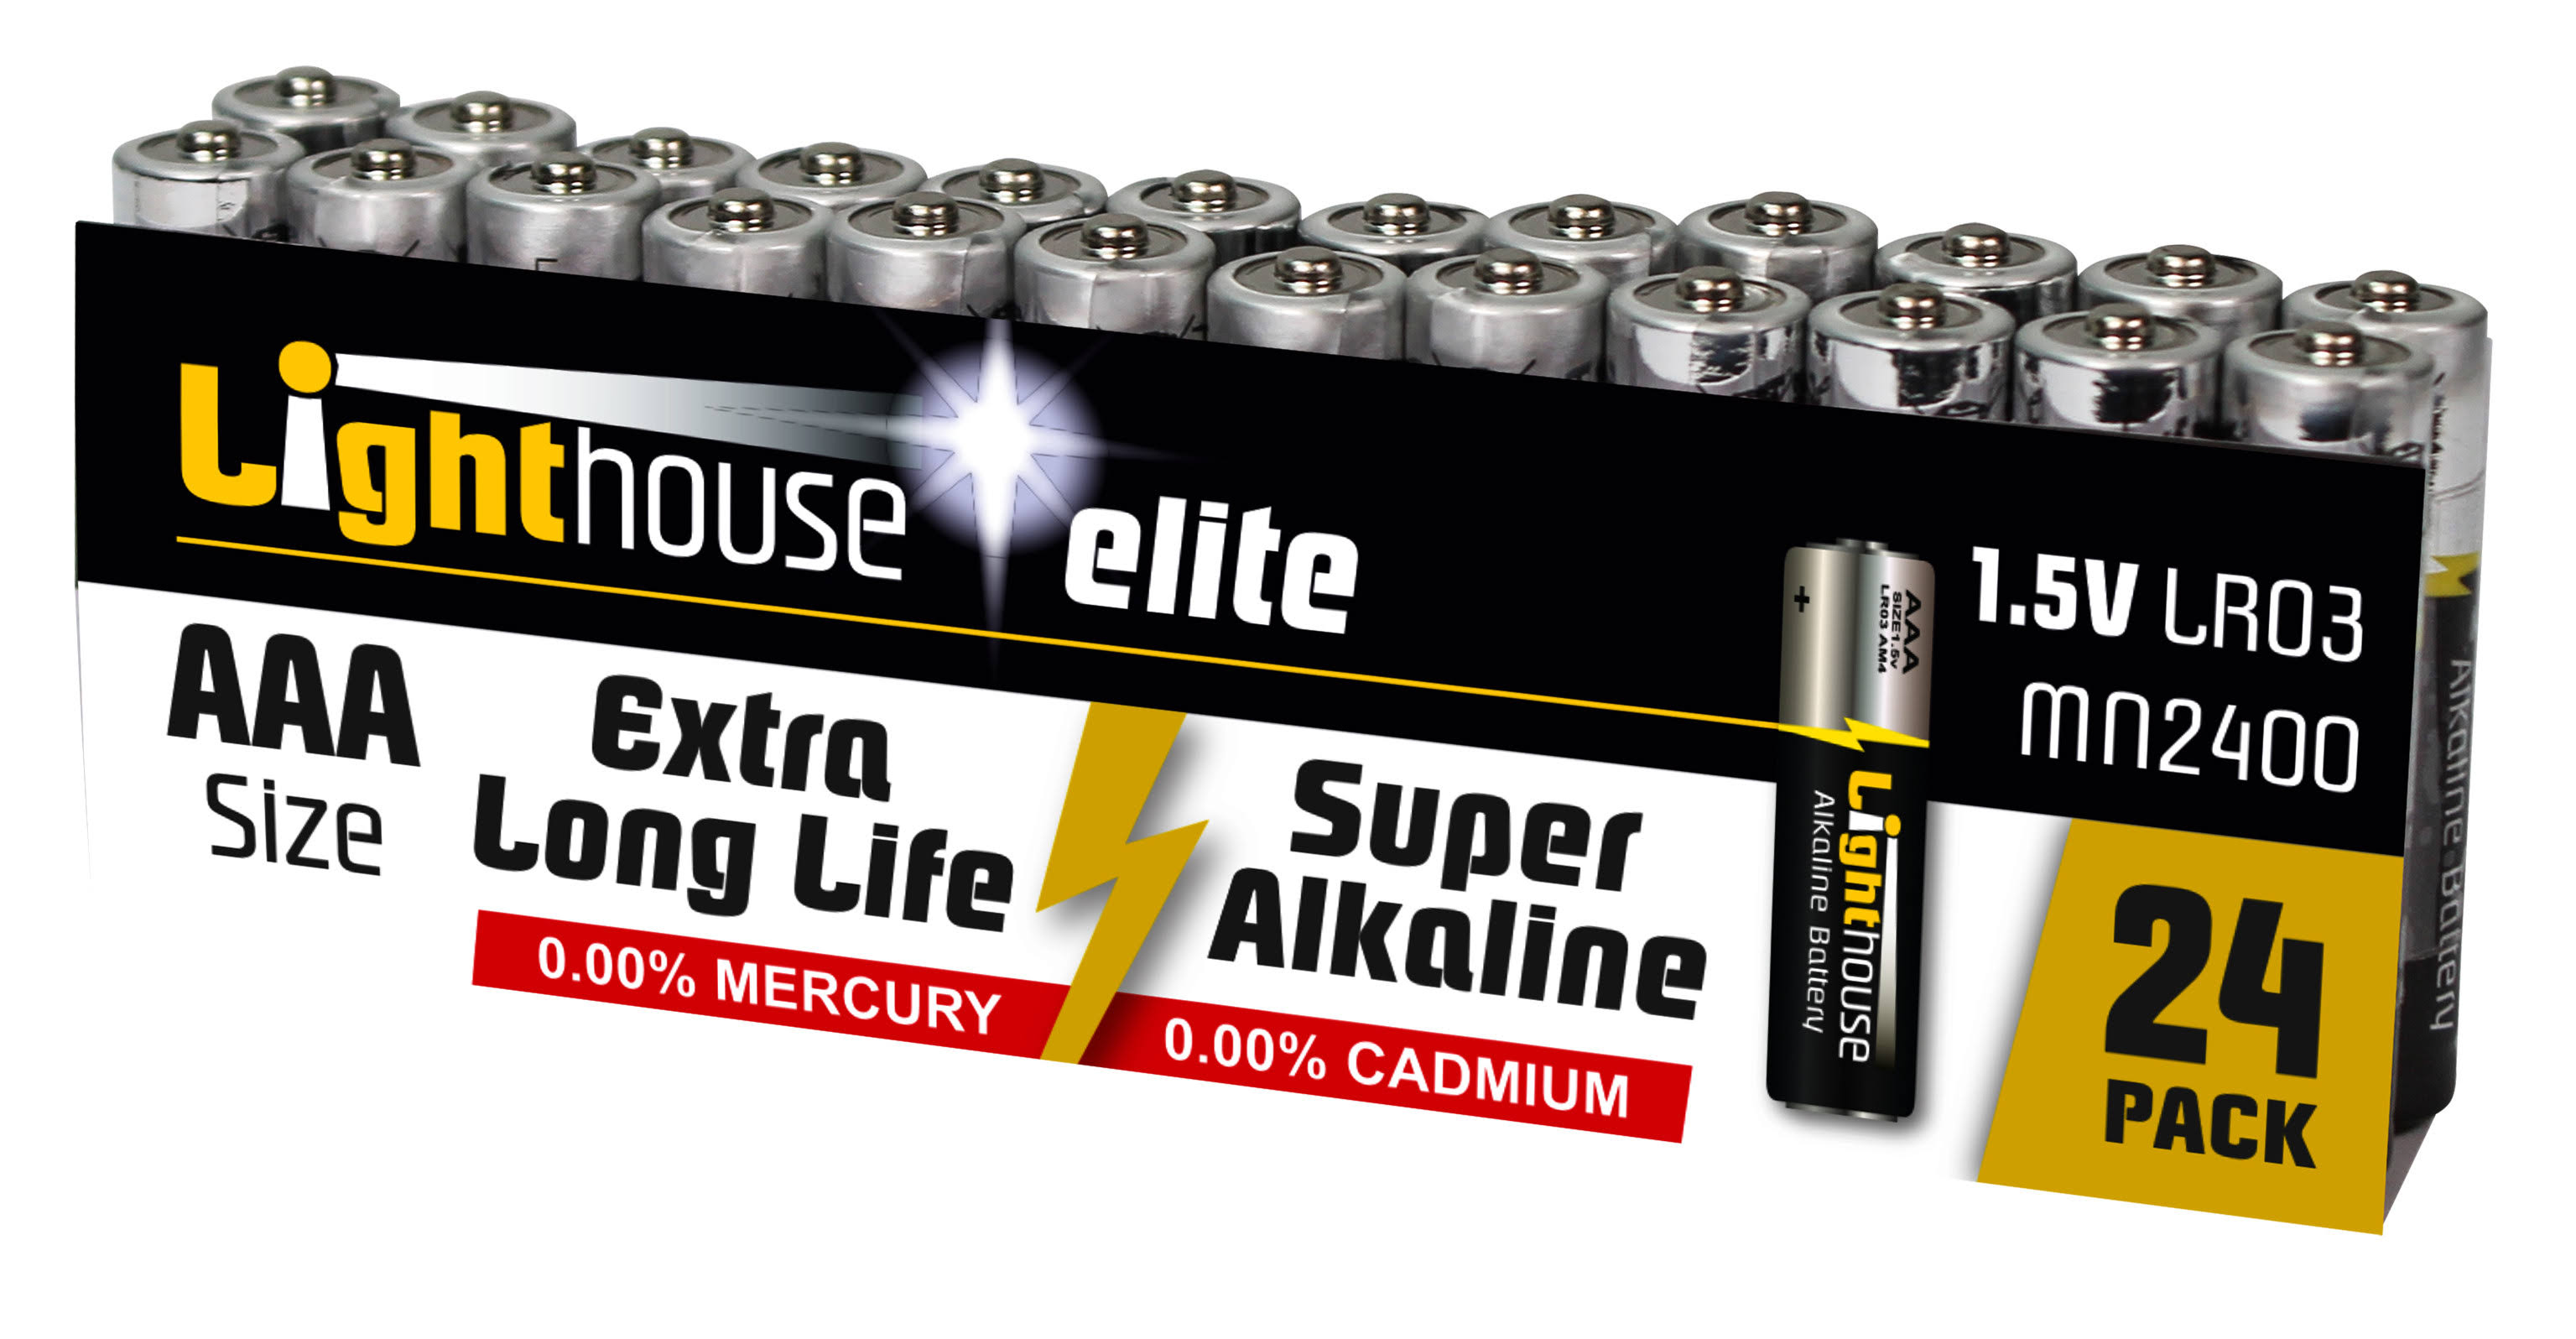 Lighthouse AAA Alkaline Batteries (Pack 24)